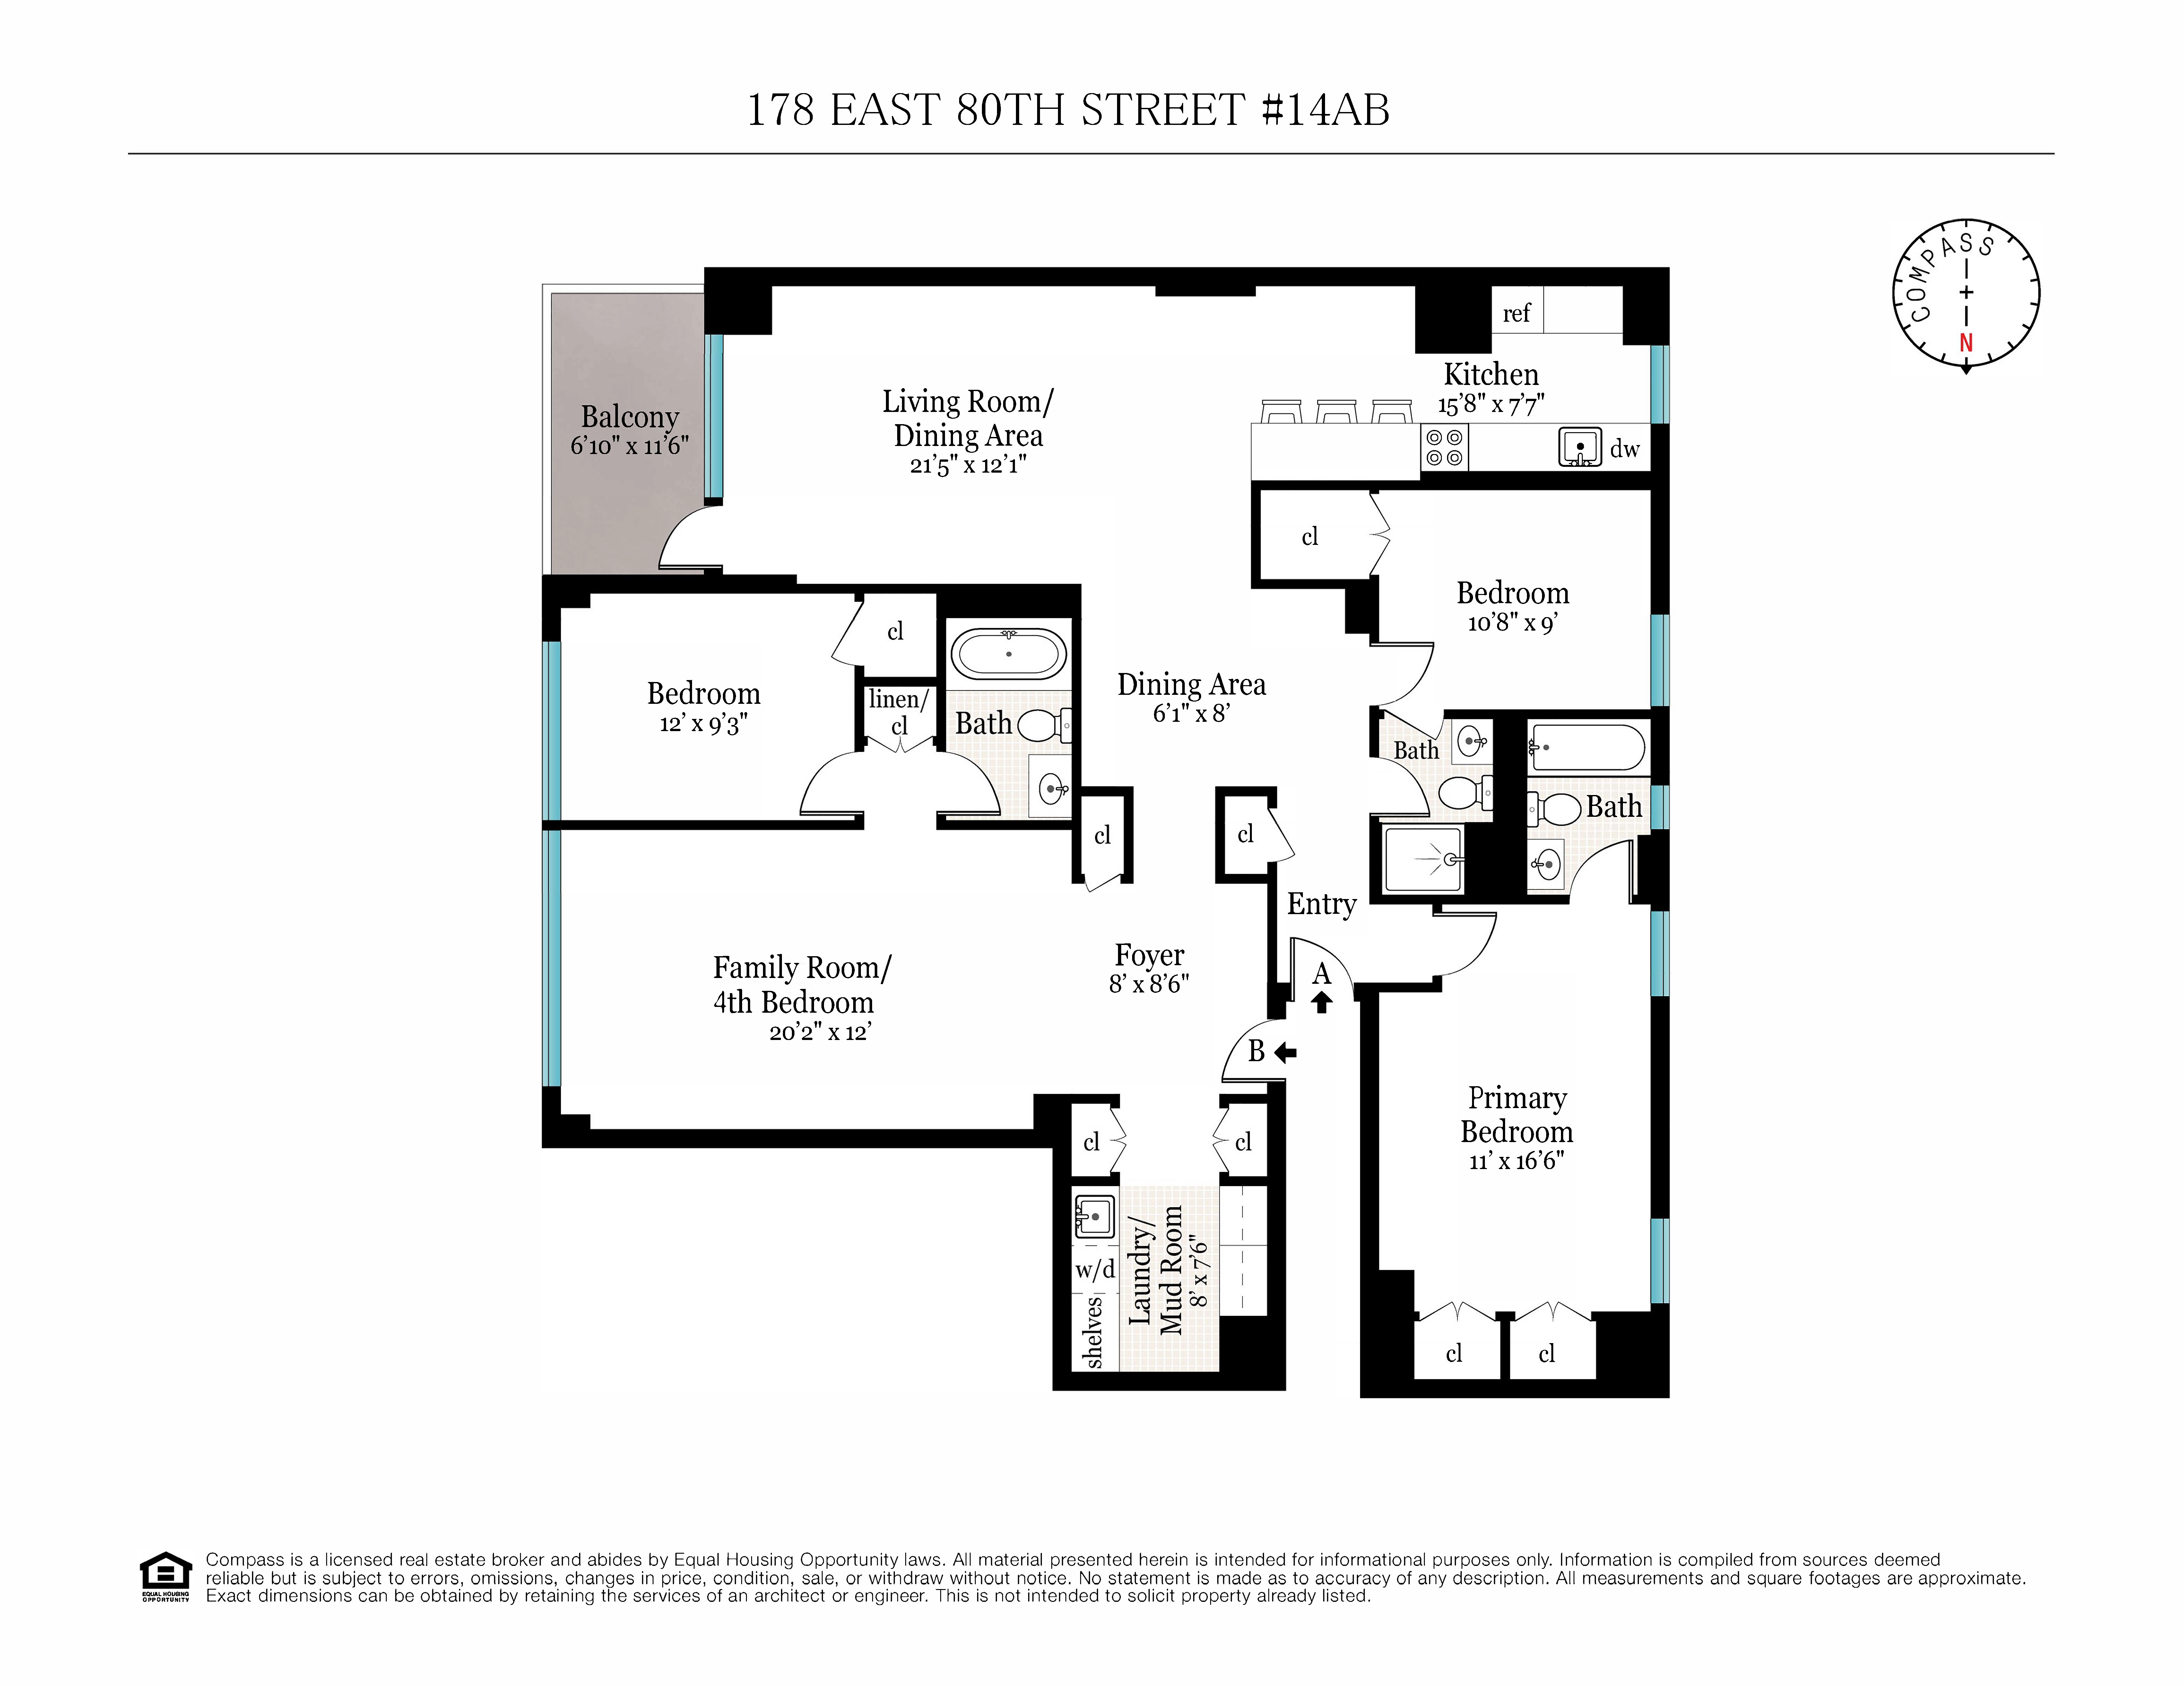 Floorplan for 178 East 80th Street, 14AB